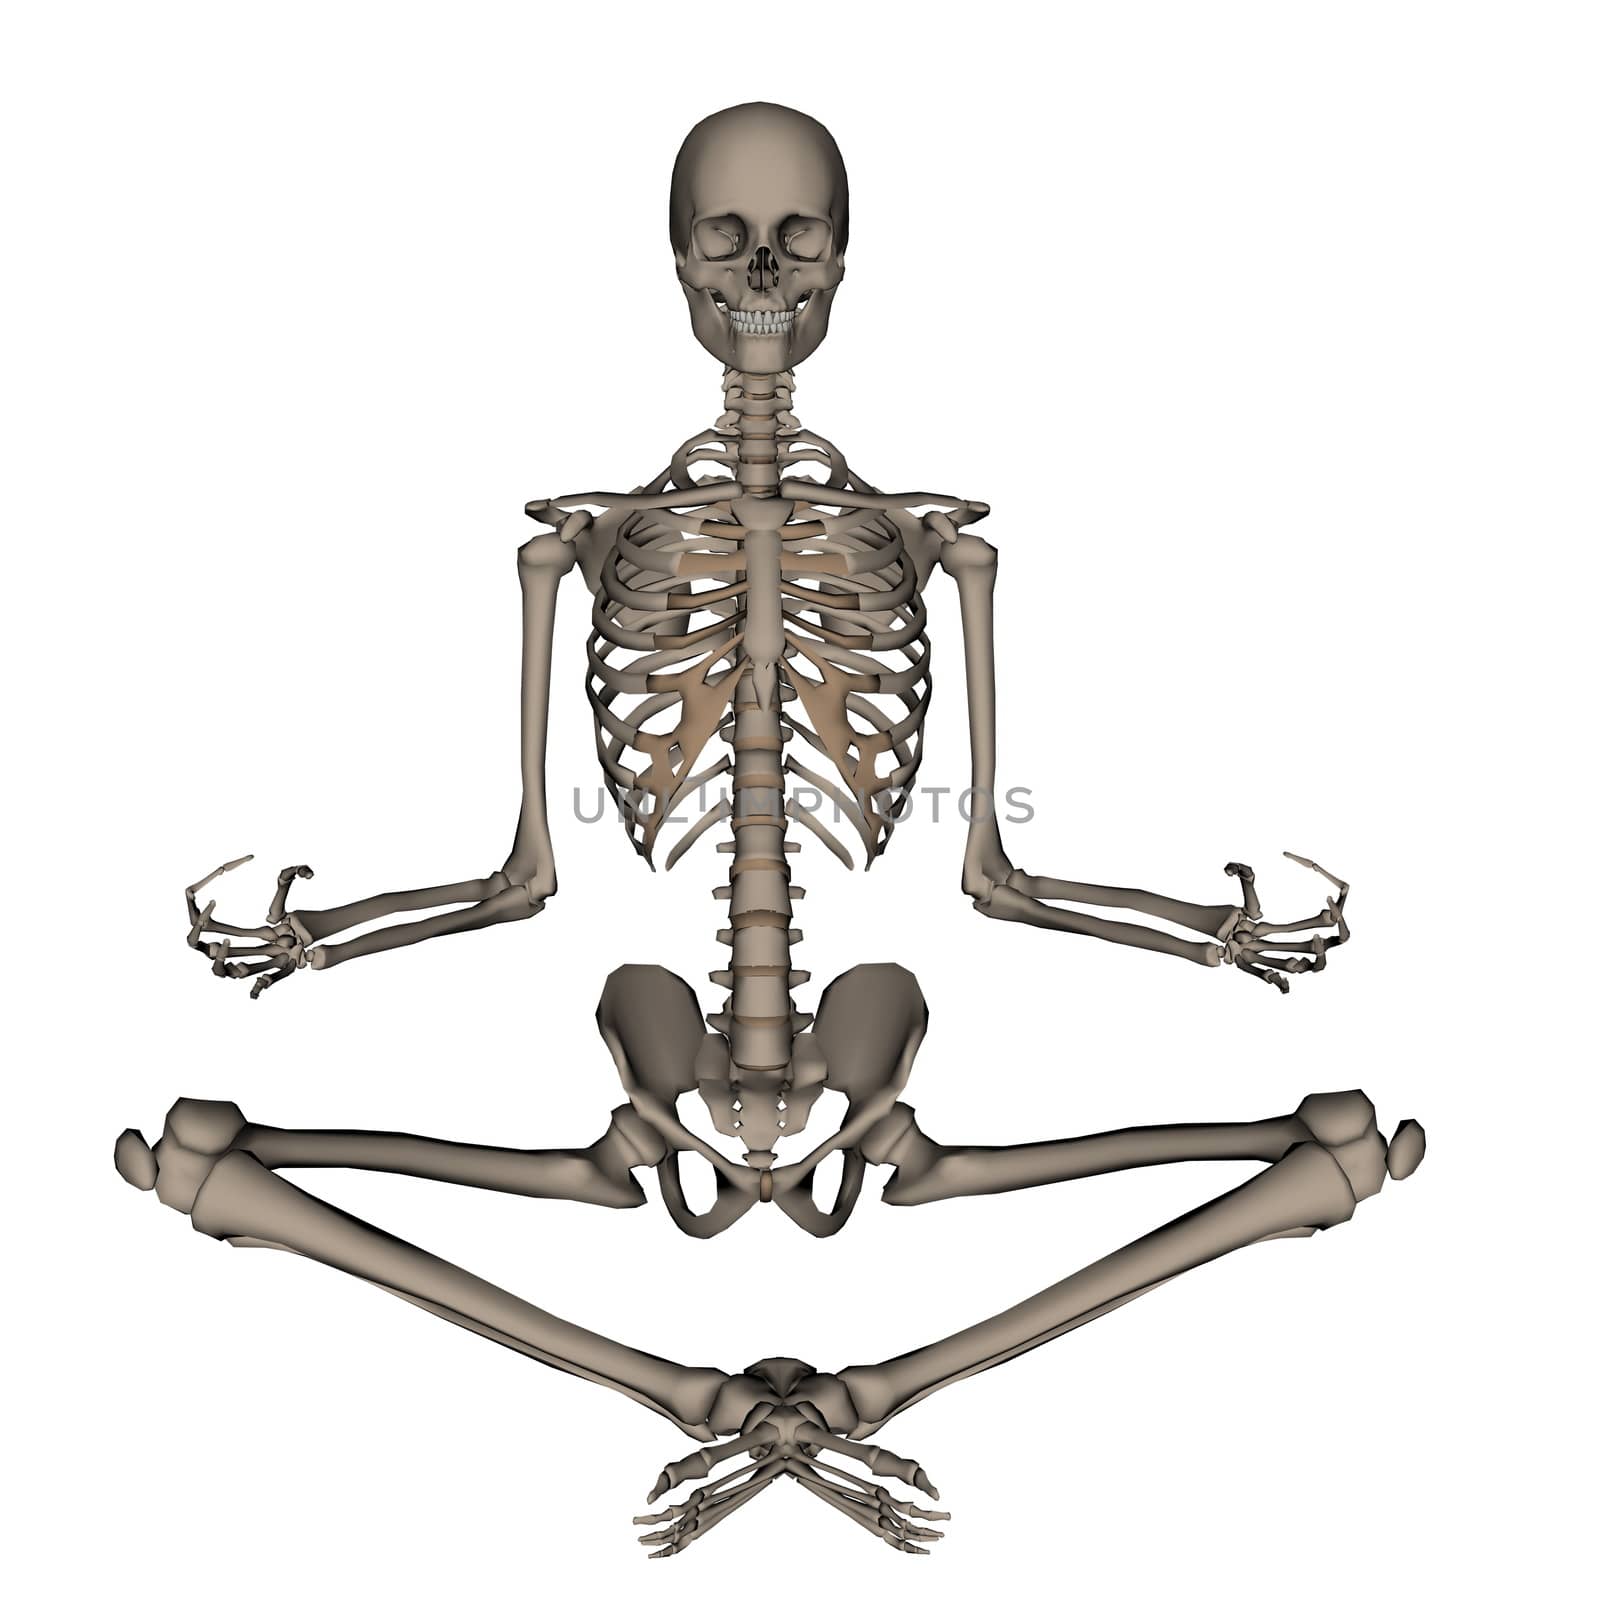 Human skeleton meditation- 3D render by Elenaphotos21